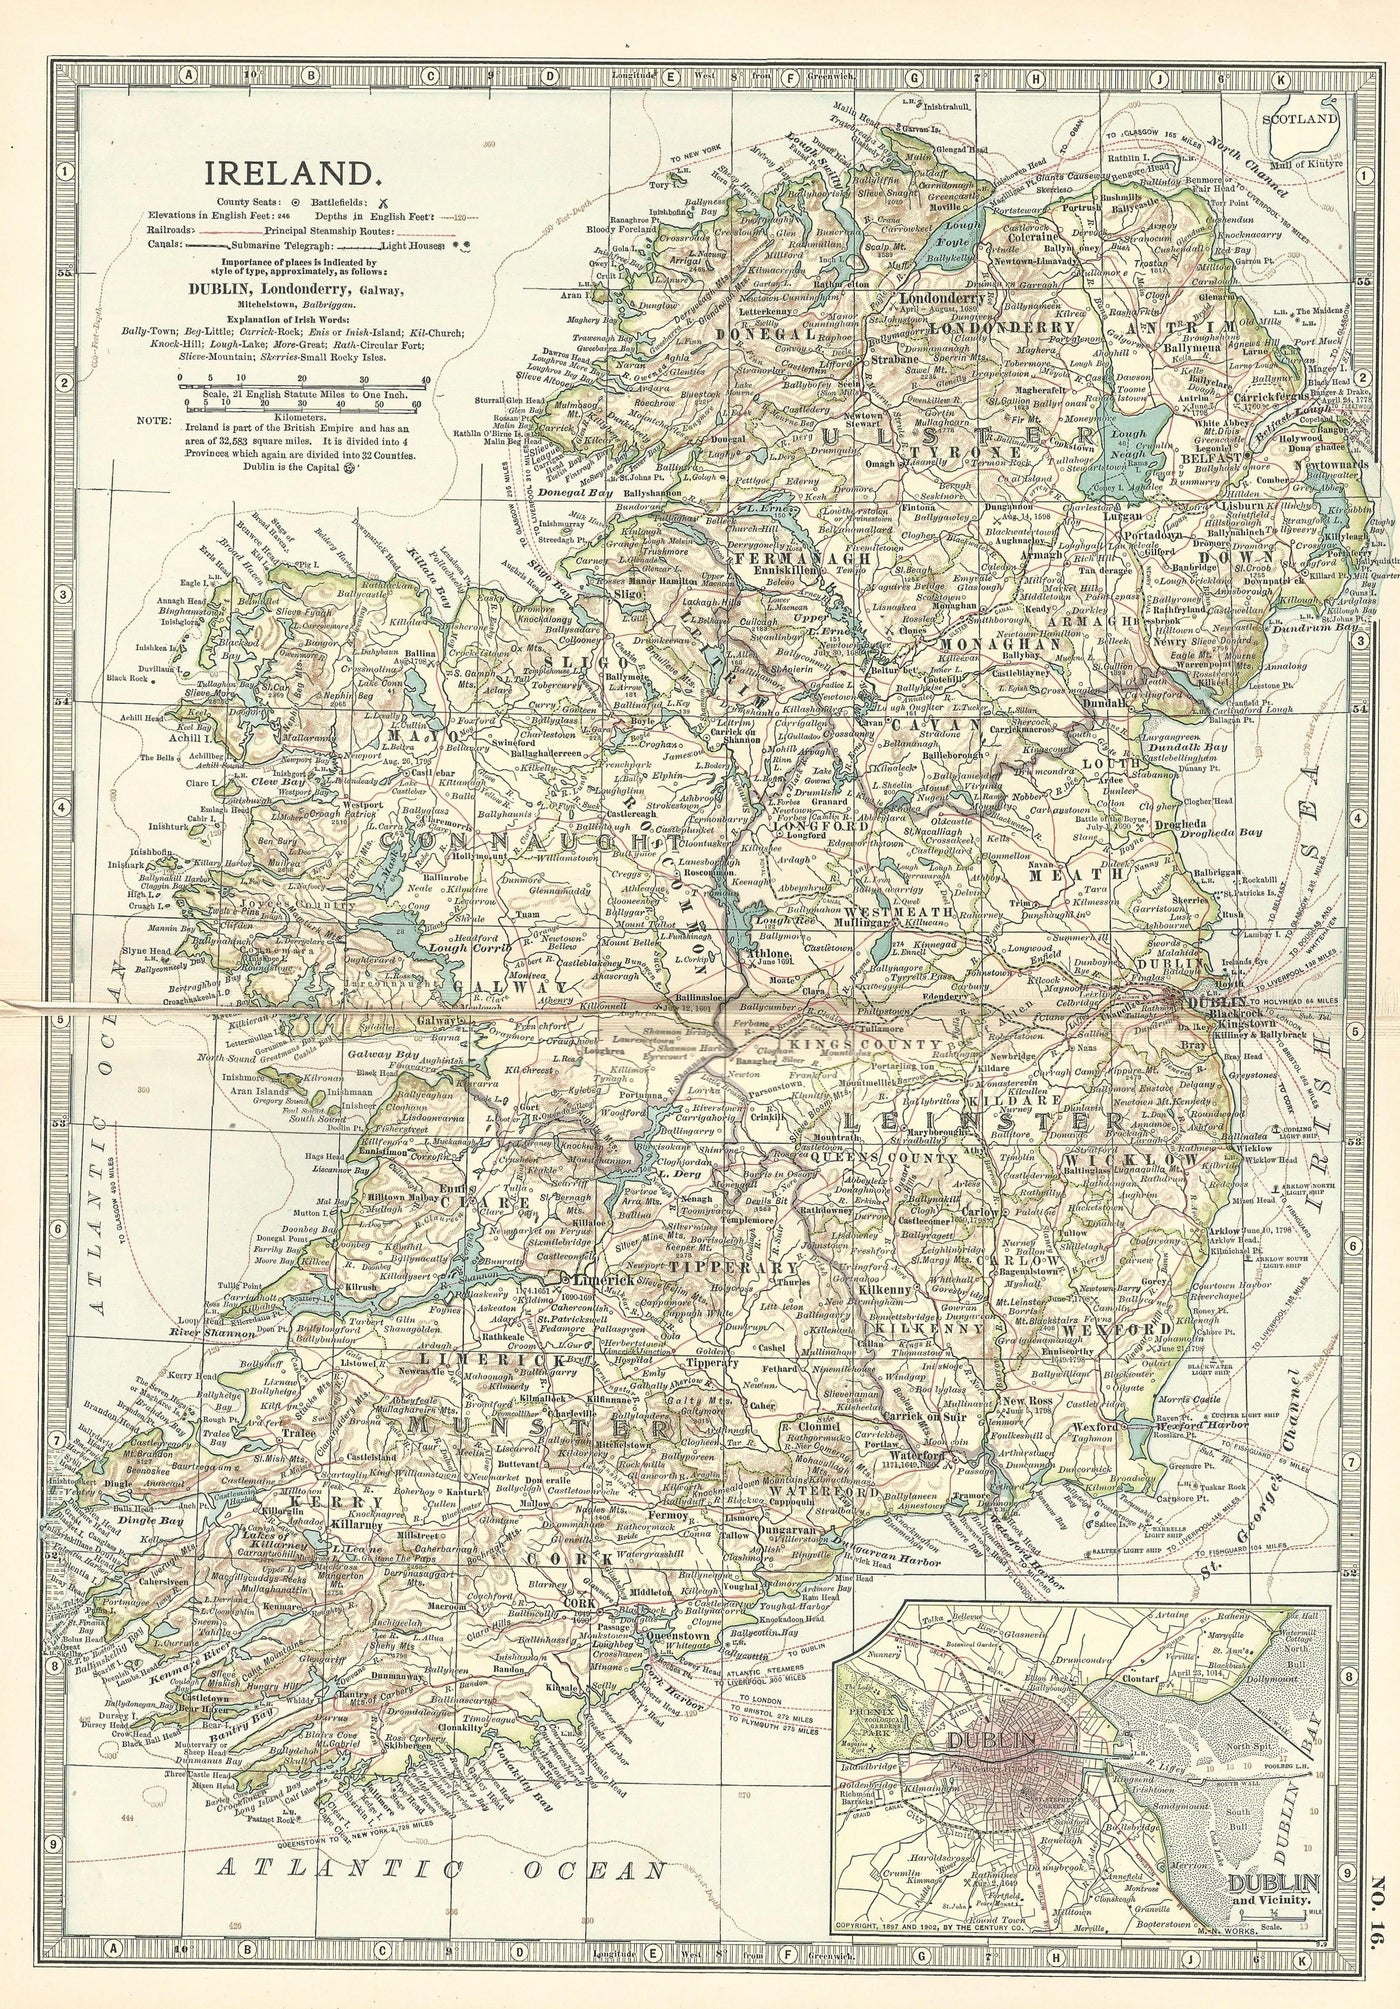 Ireland antique map from Encyclopaedia Britannica 1903